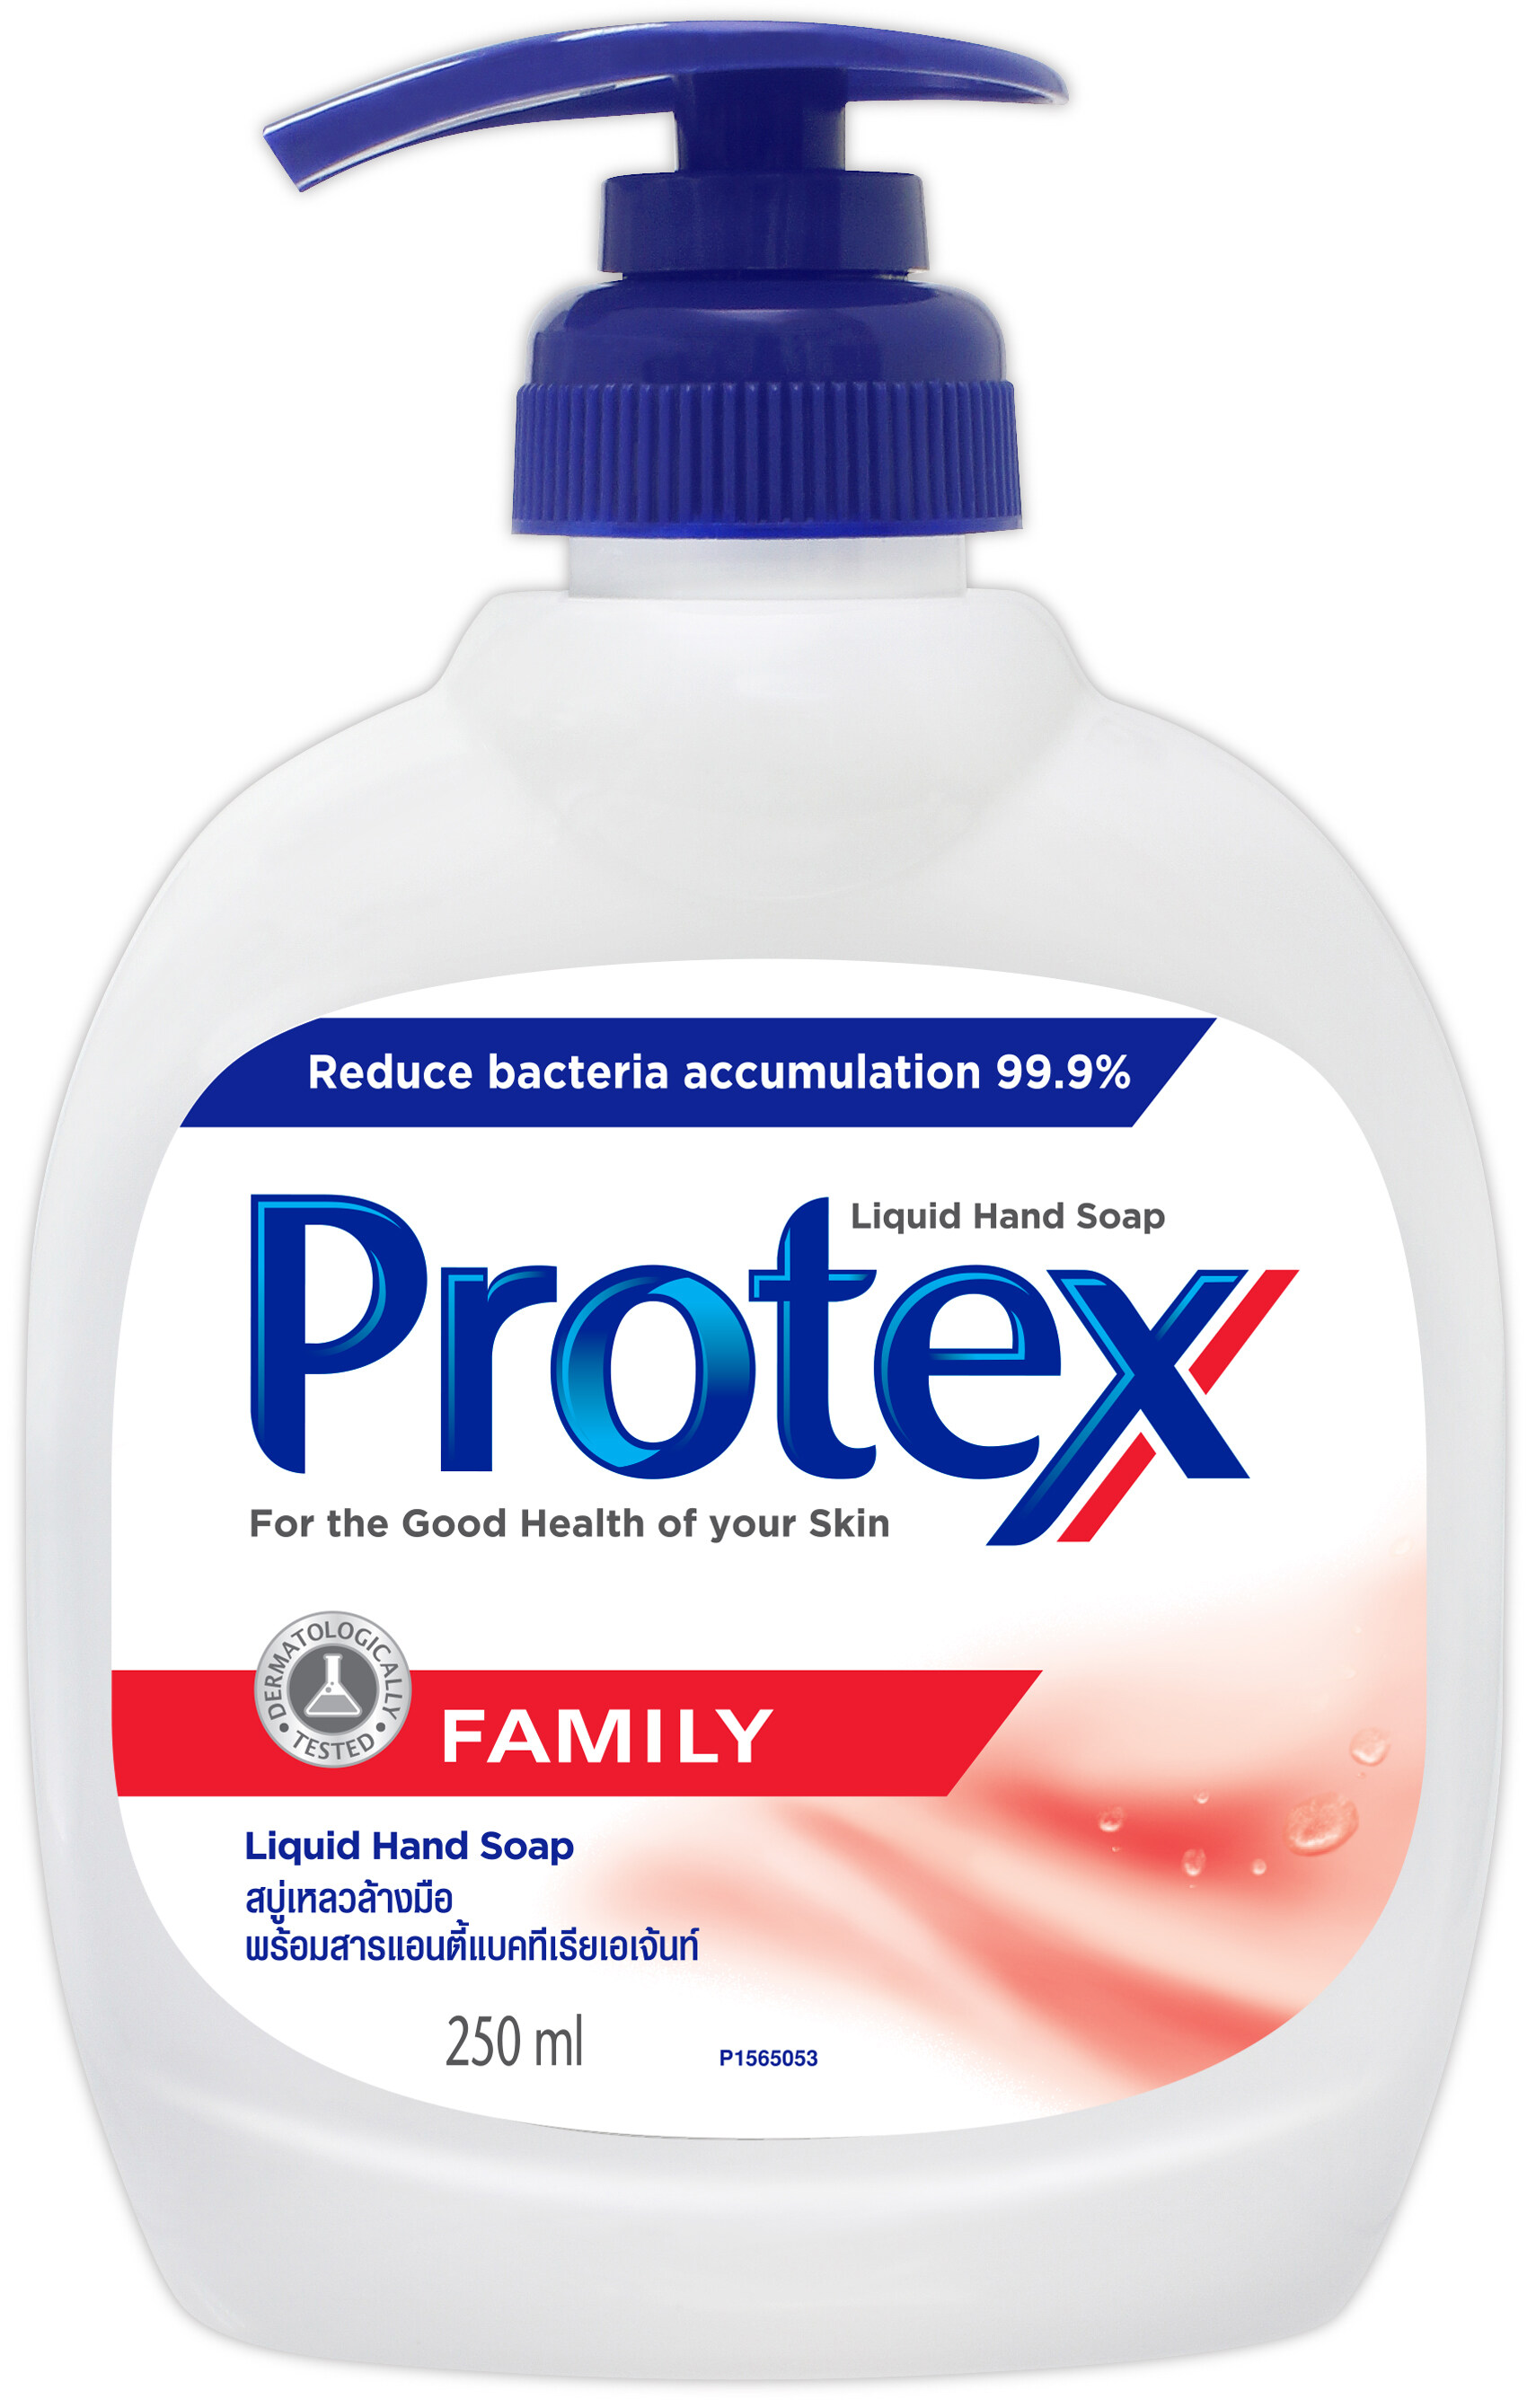 protex liquid hand soap 250ml family lazada